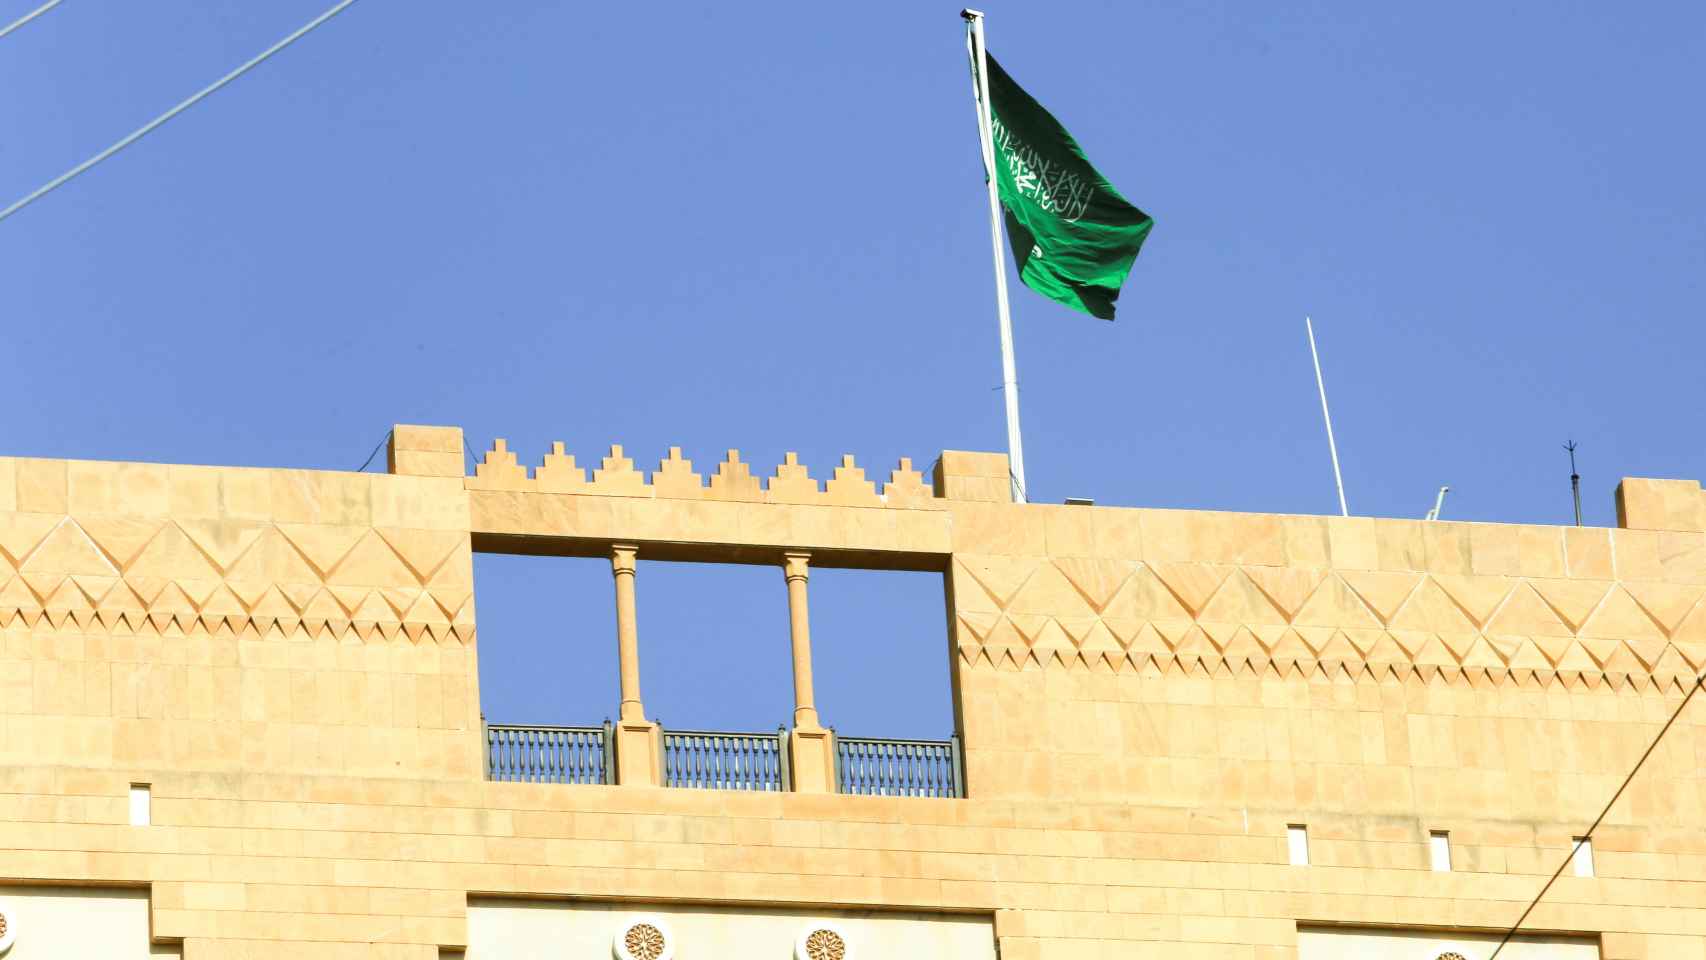 La embajada de Arabia Saudí en Beirut, Líbano.